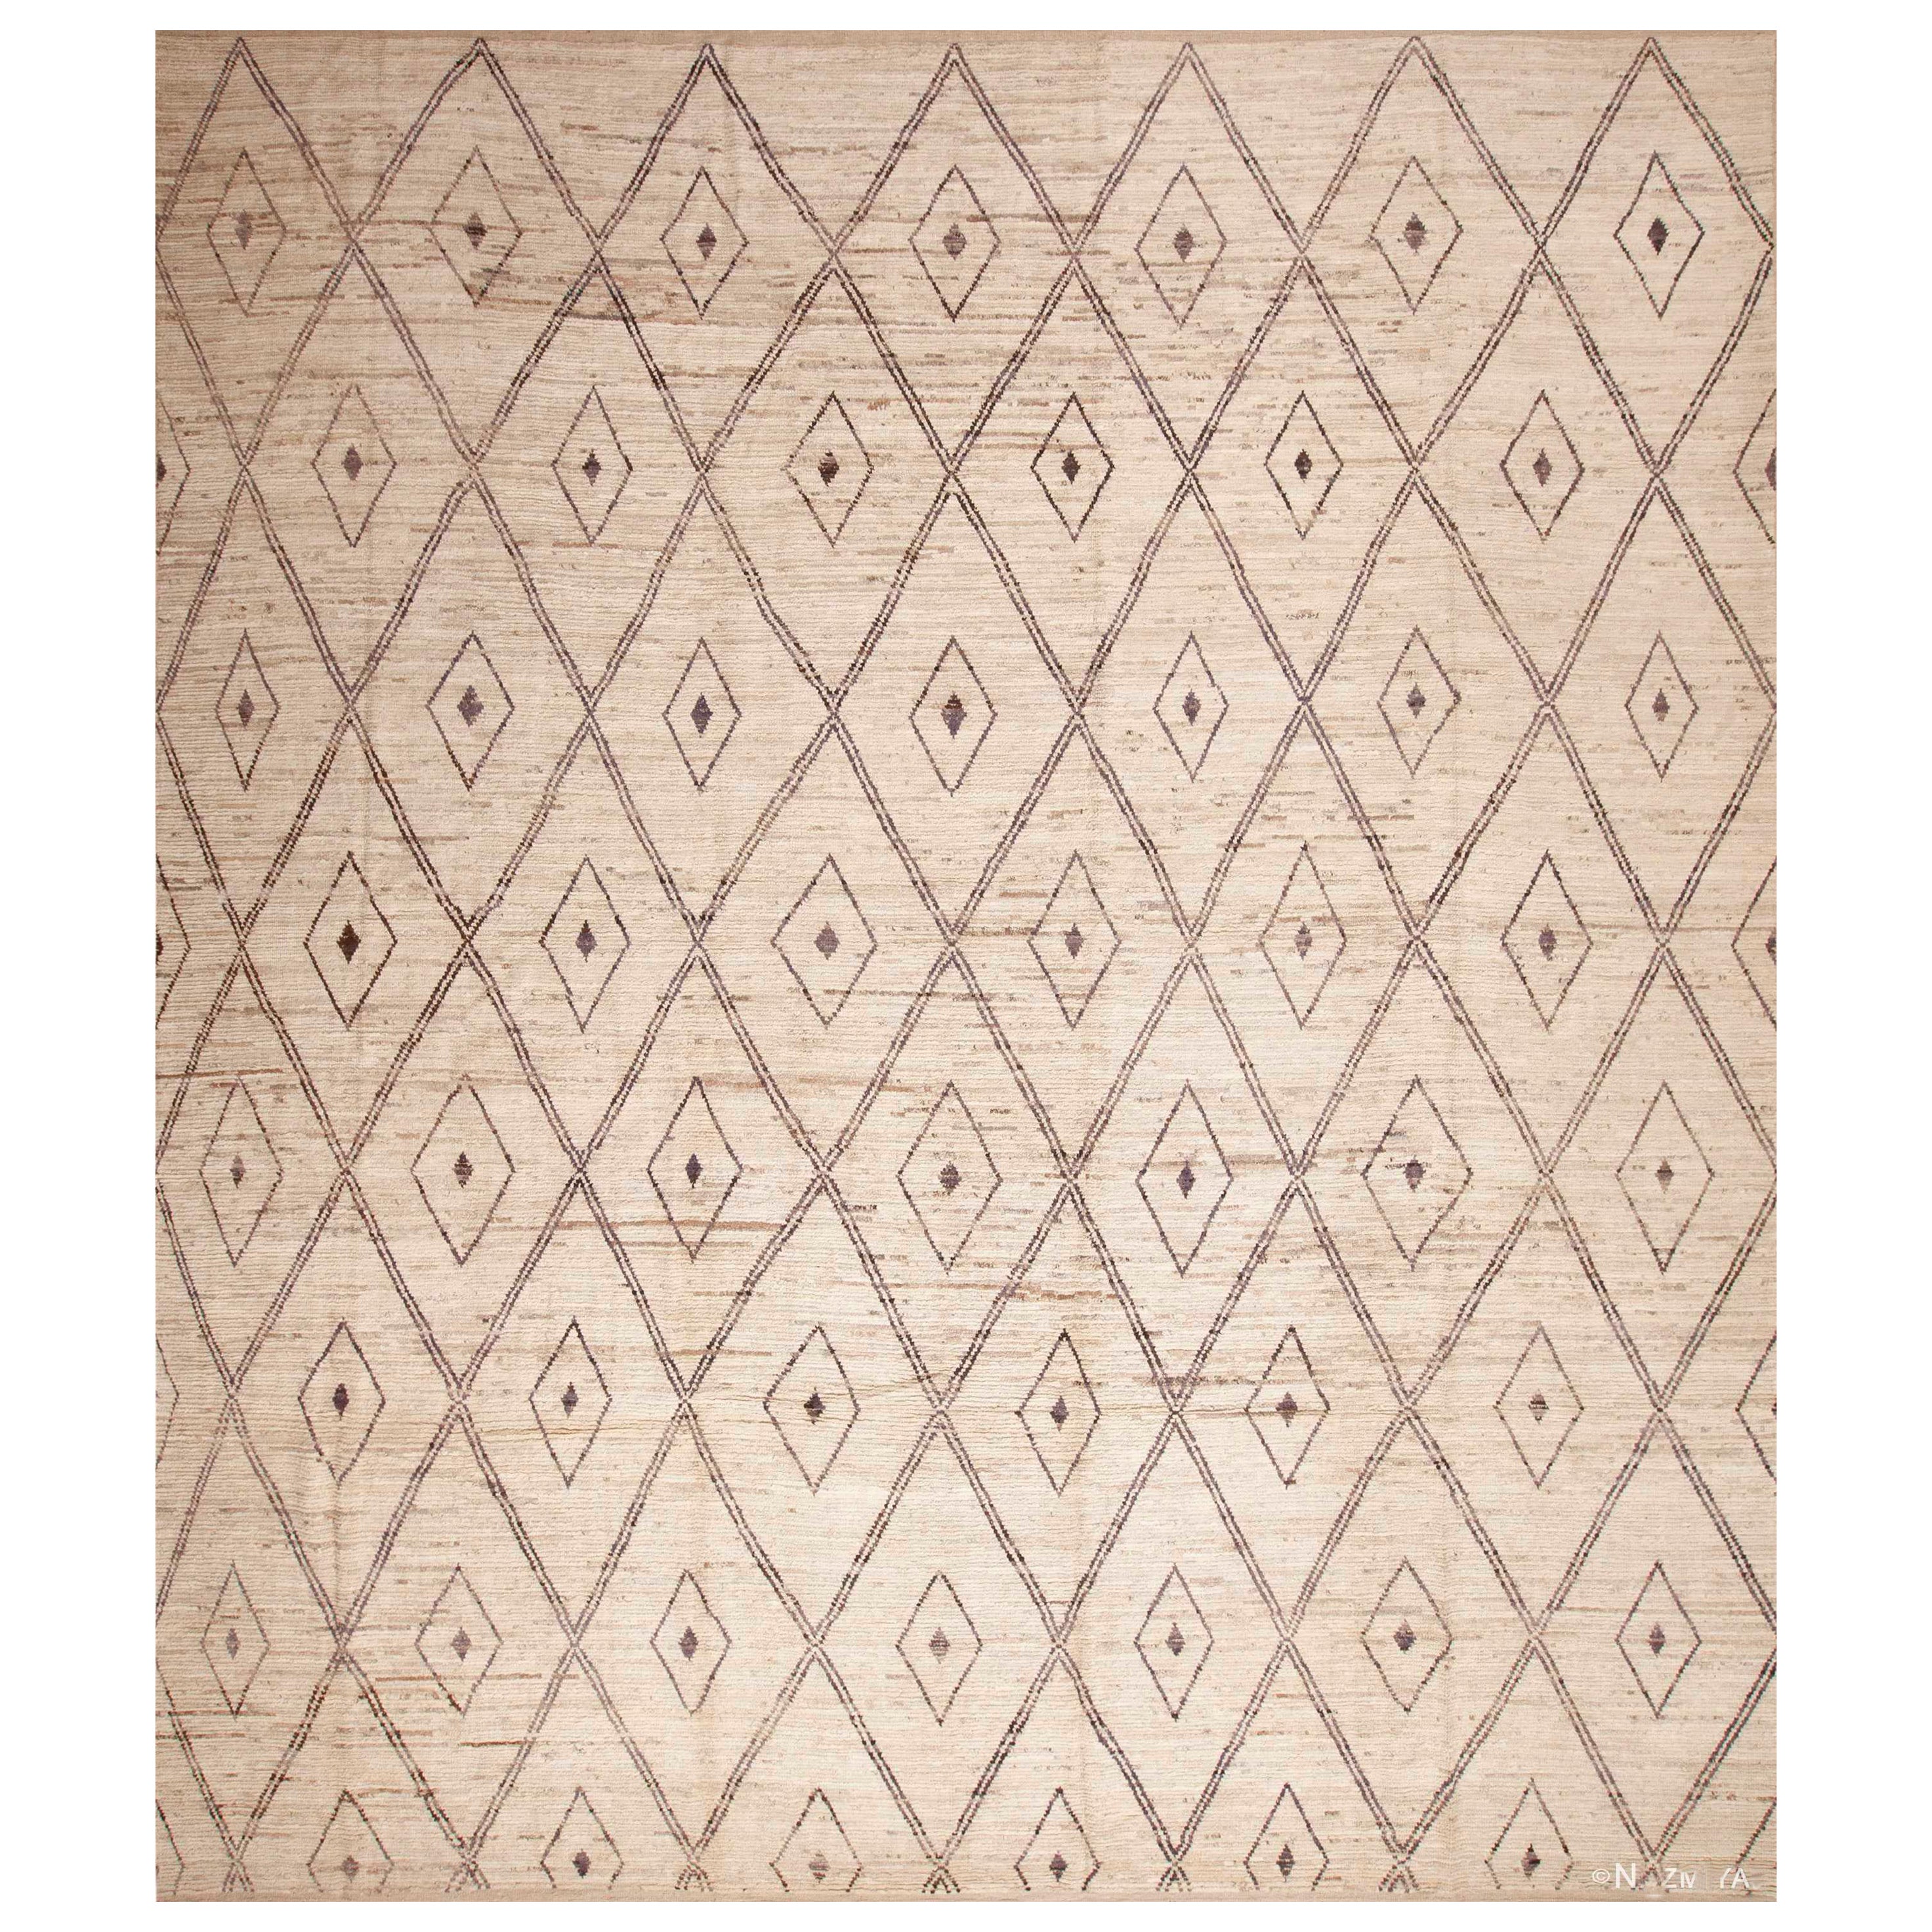 Nazmiyal Kollektion Moderner Stammeskunst Berber Beni Ourain Design Teppich 13'9" x 15'10"